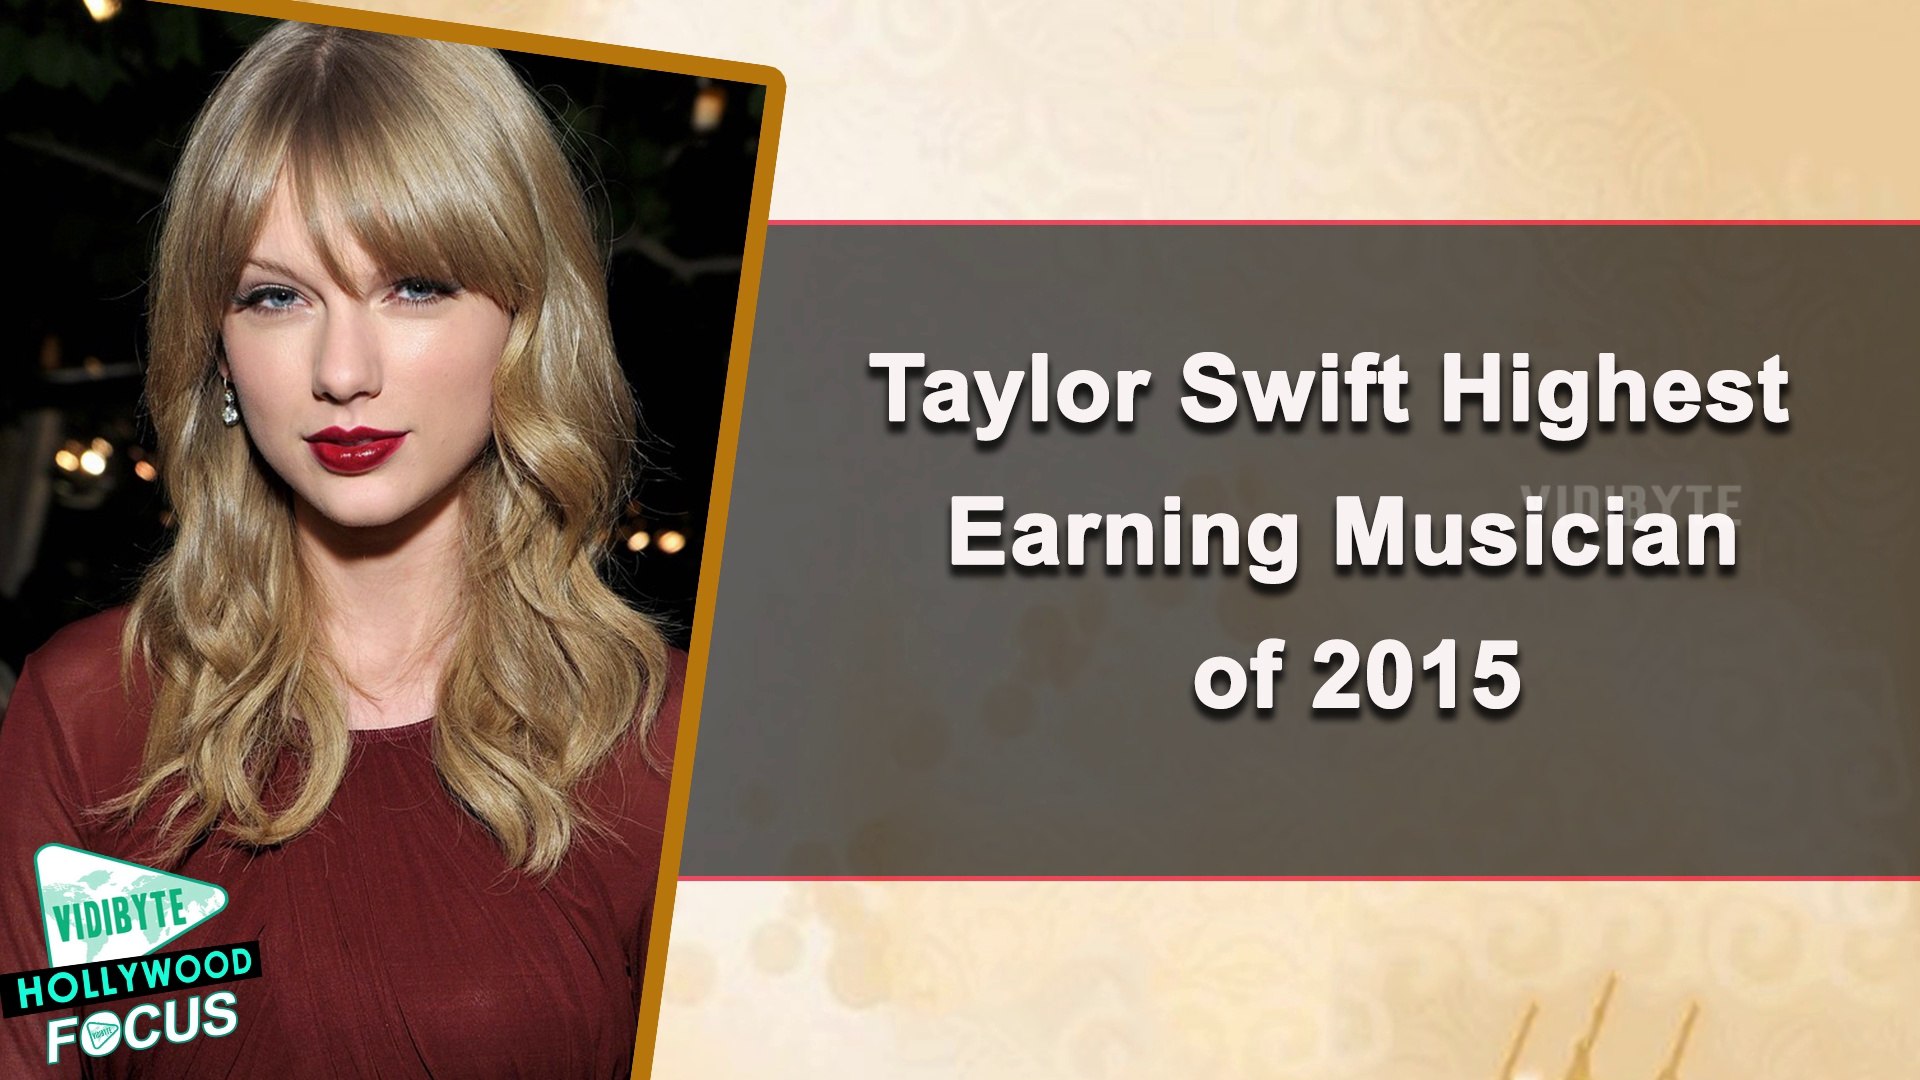 Taylor Swift Highest Earning Musician of 2015